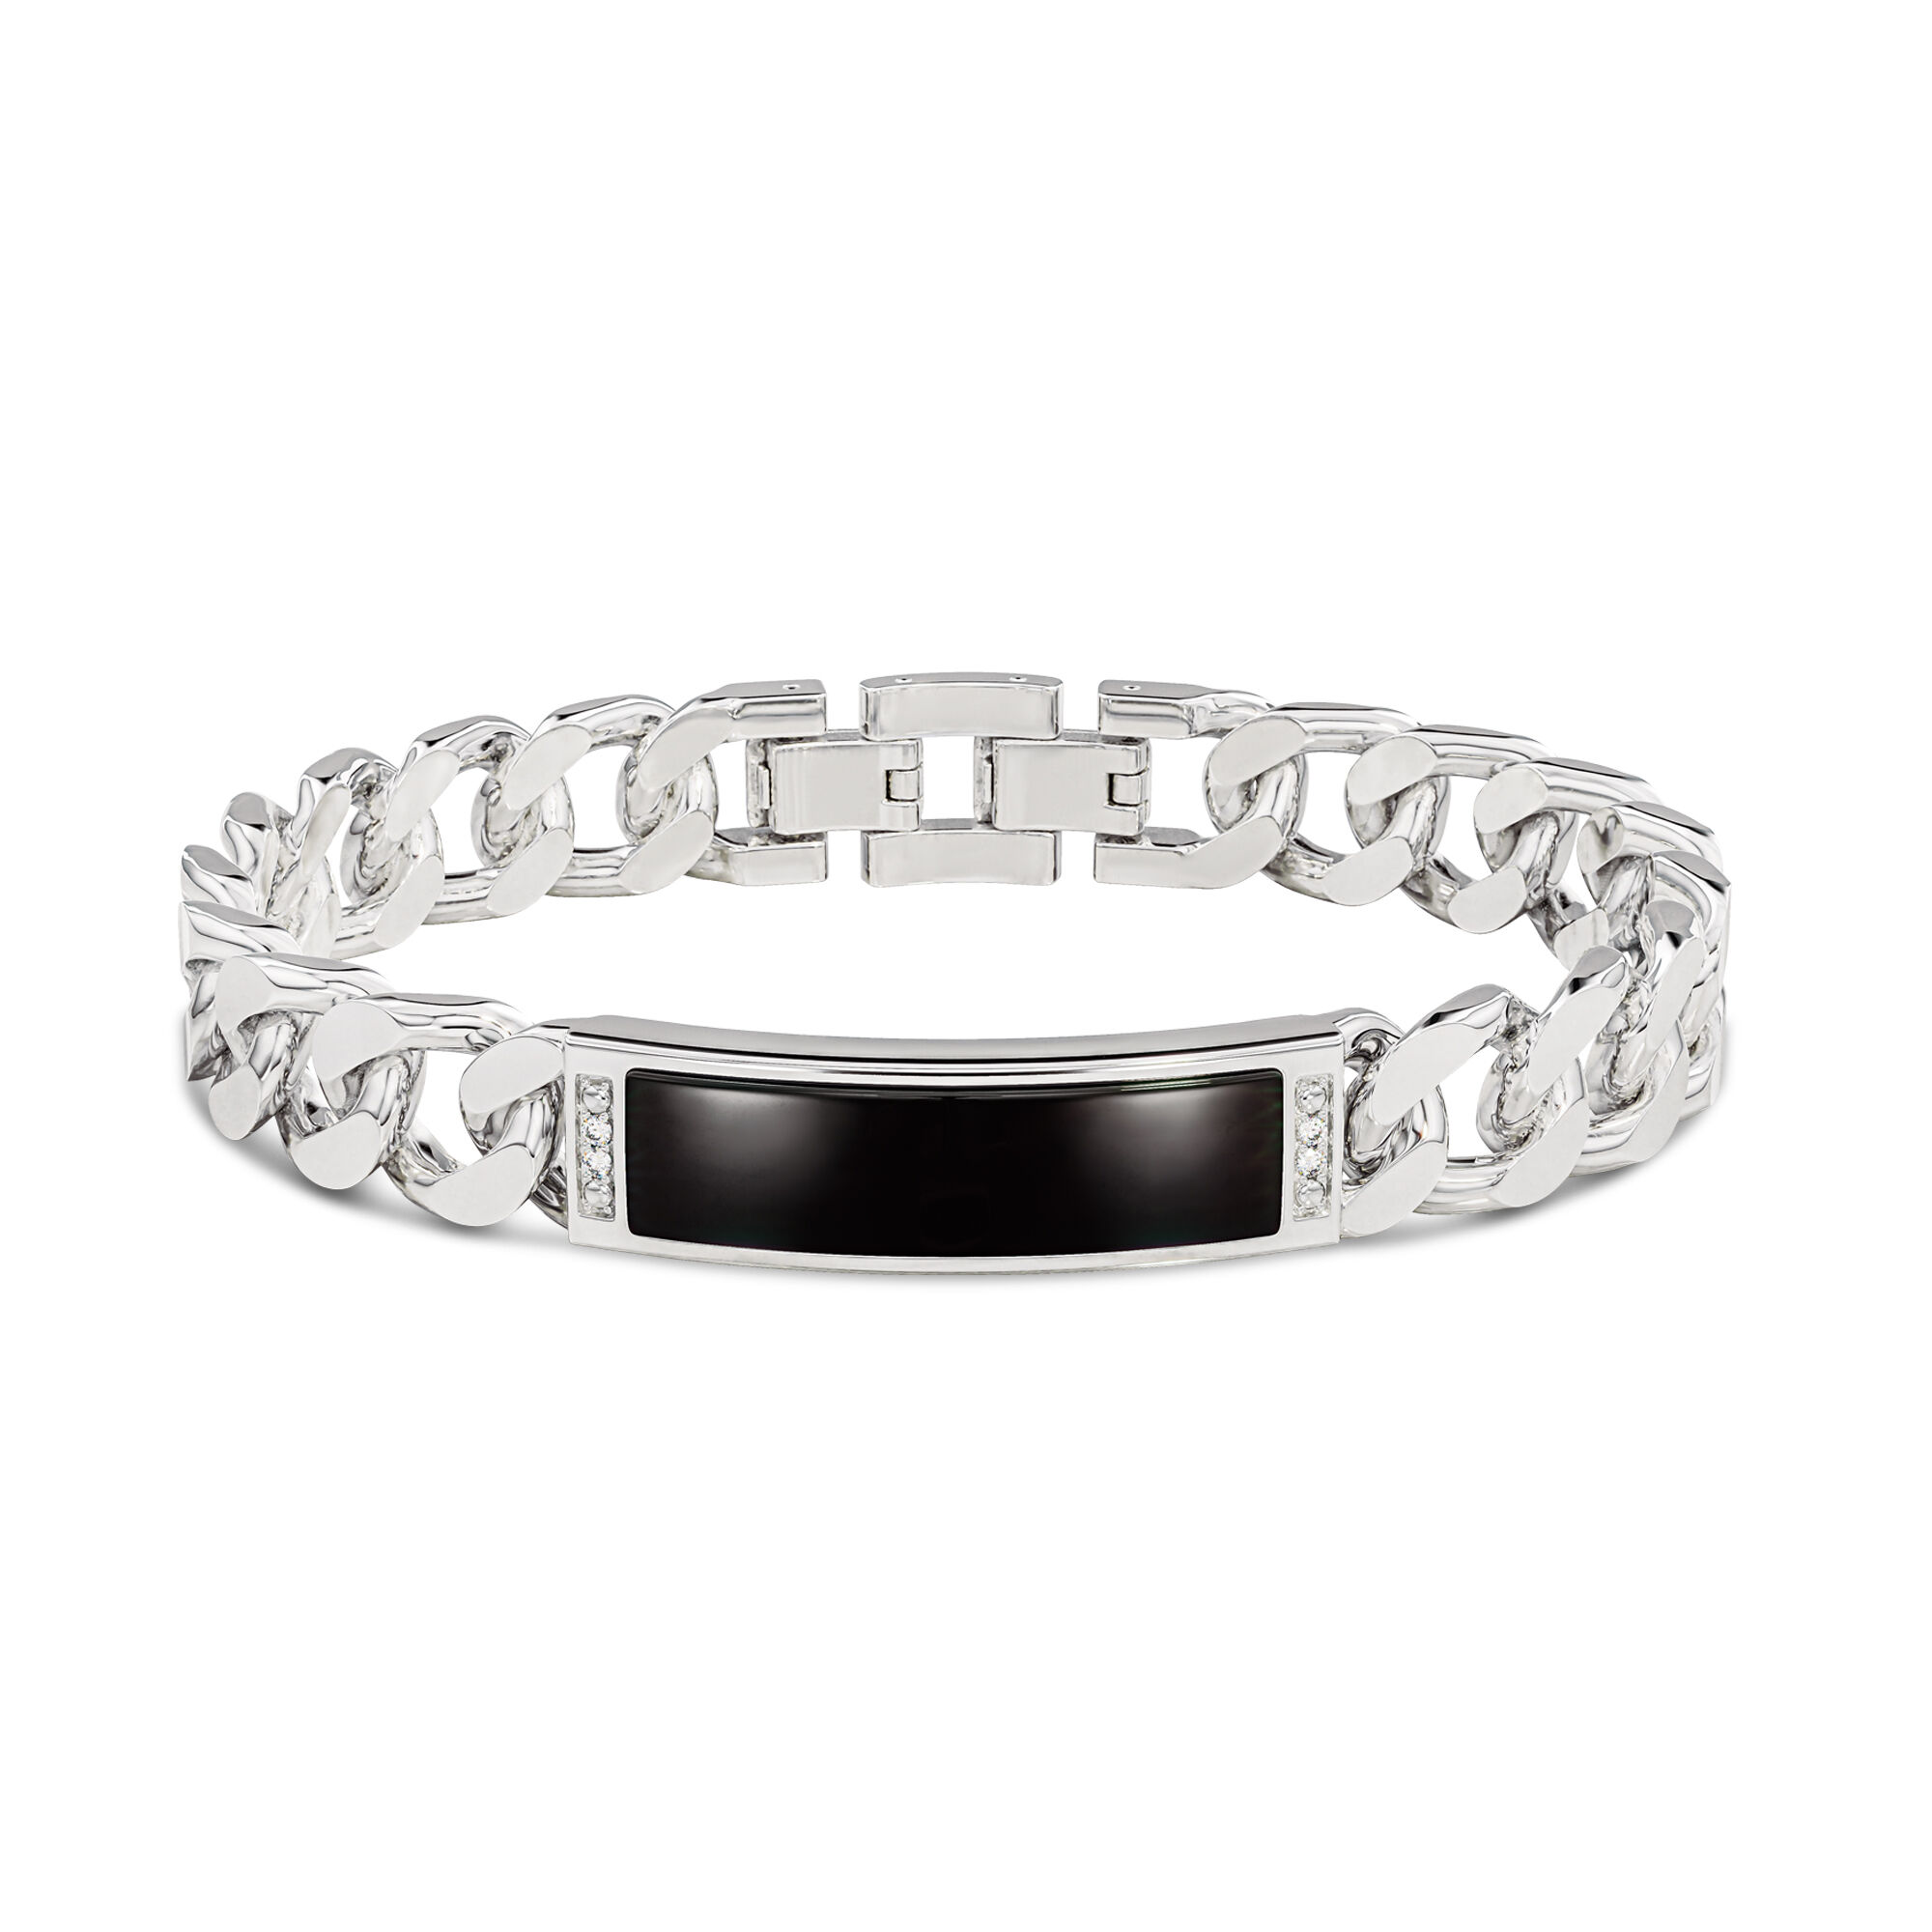 Links of Steel Ring Bracelet Set 10401 0012 c bracelet